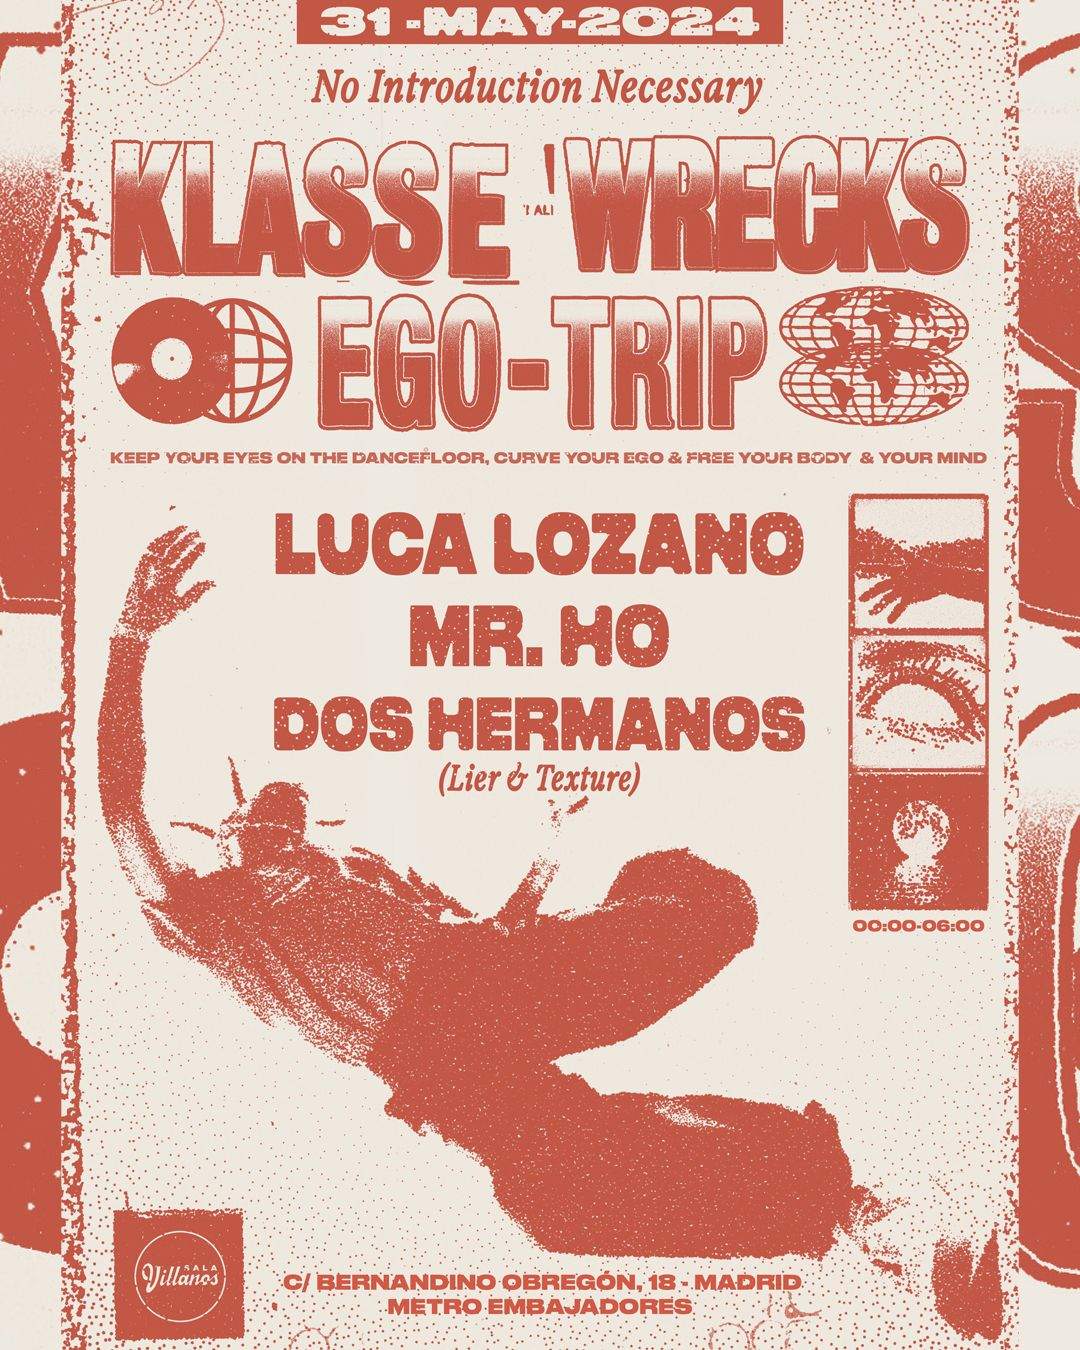 Ego-Trip X Klasse Wrecks with Luca Lozano & Mr. Ho - フライヤー表